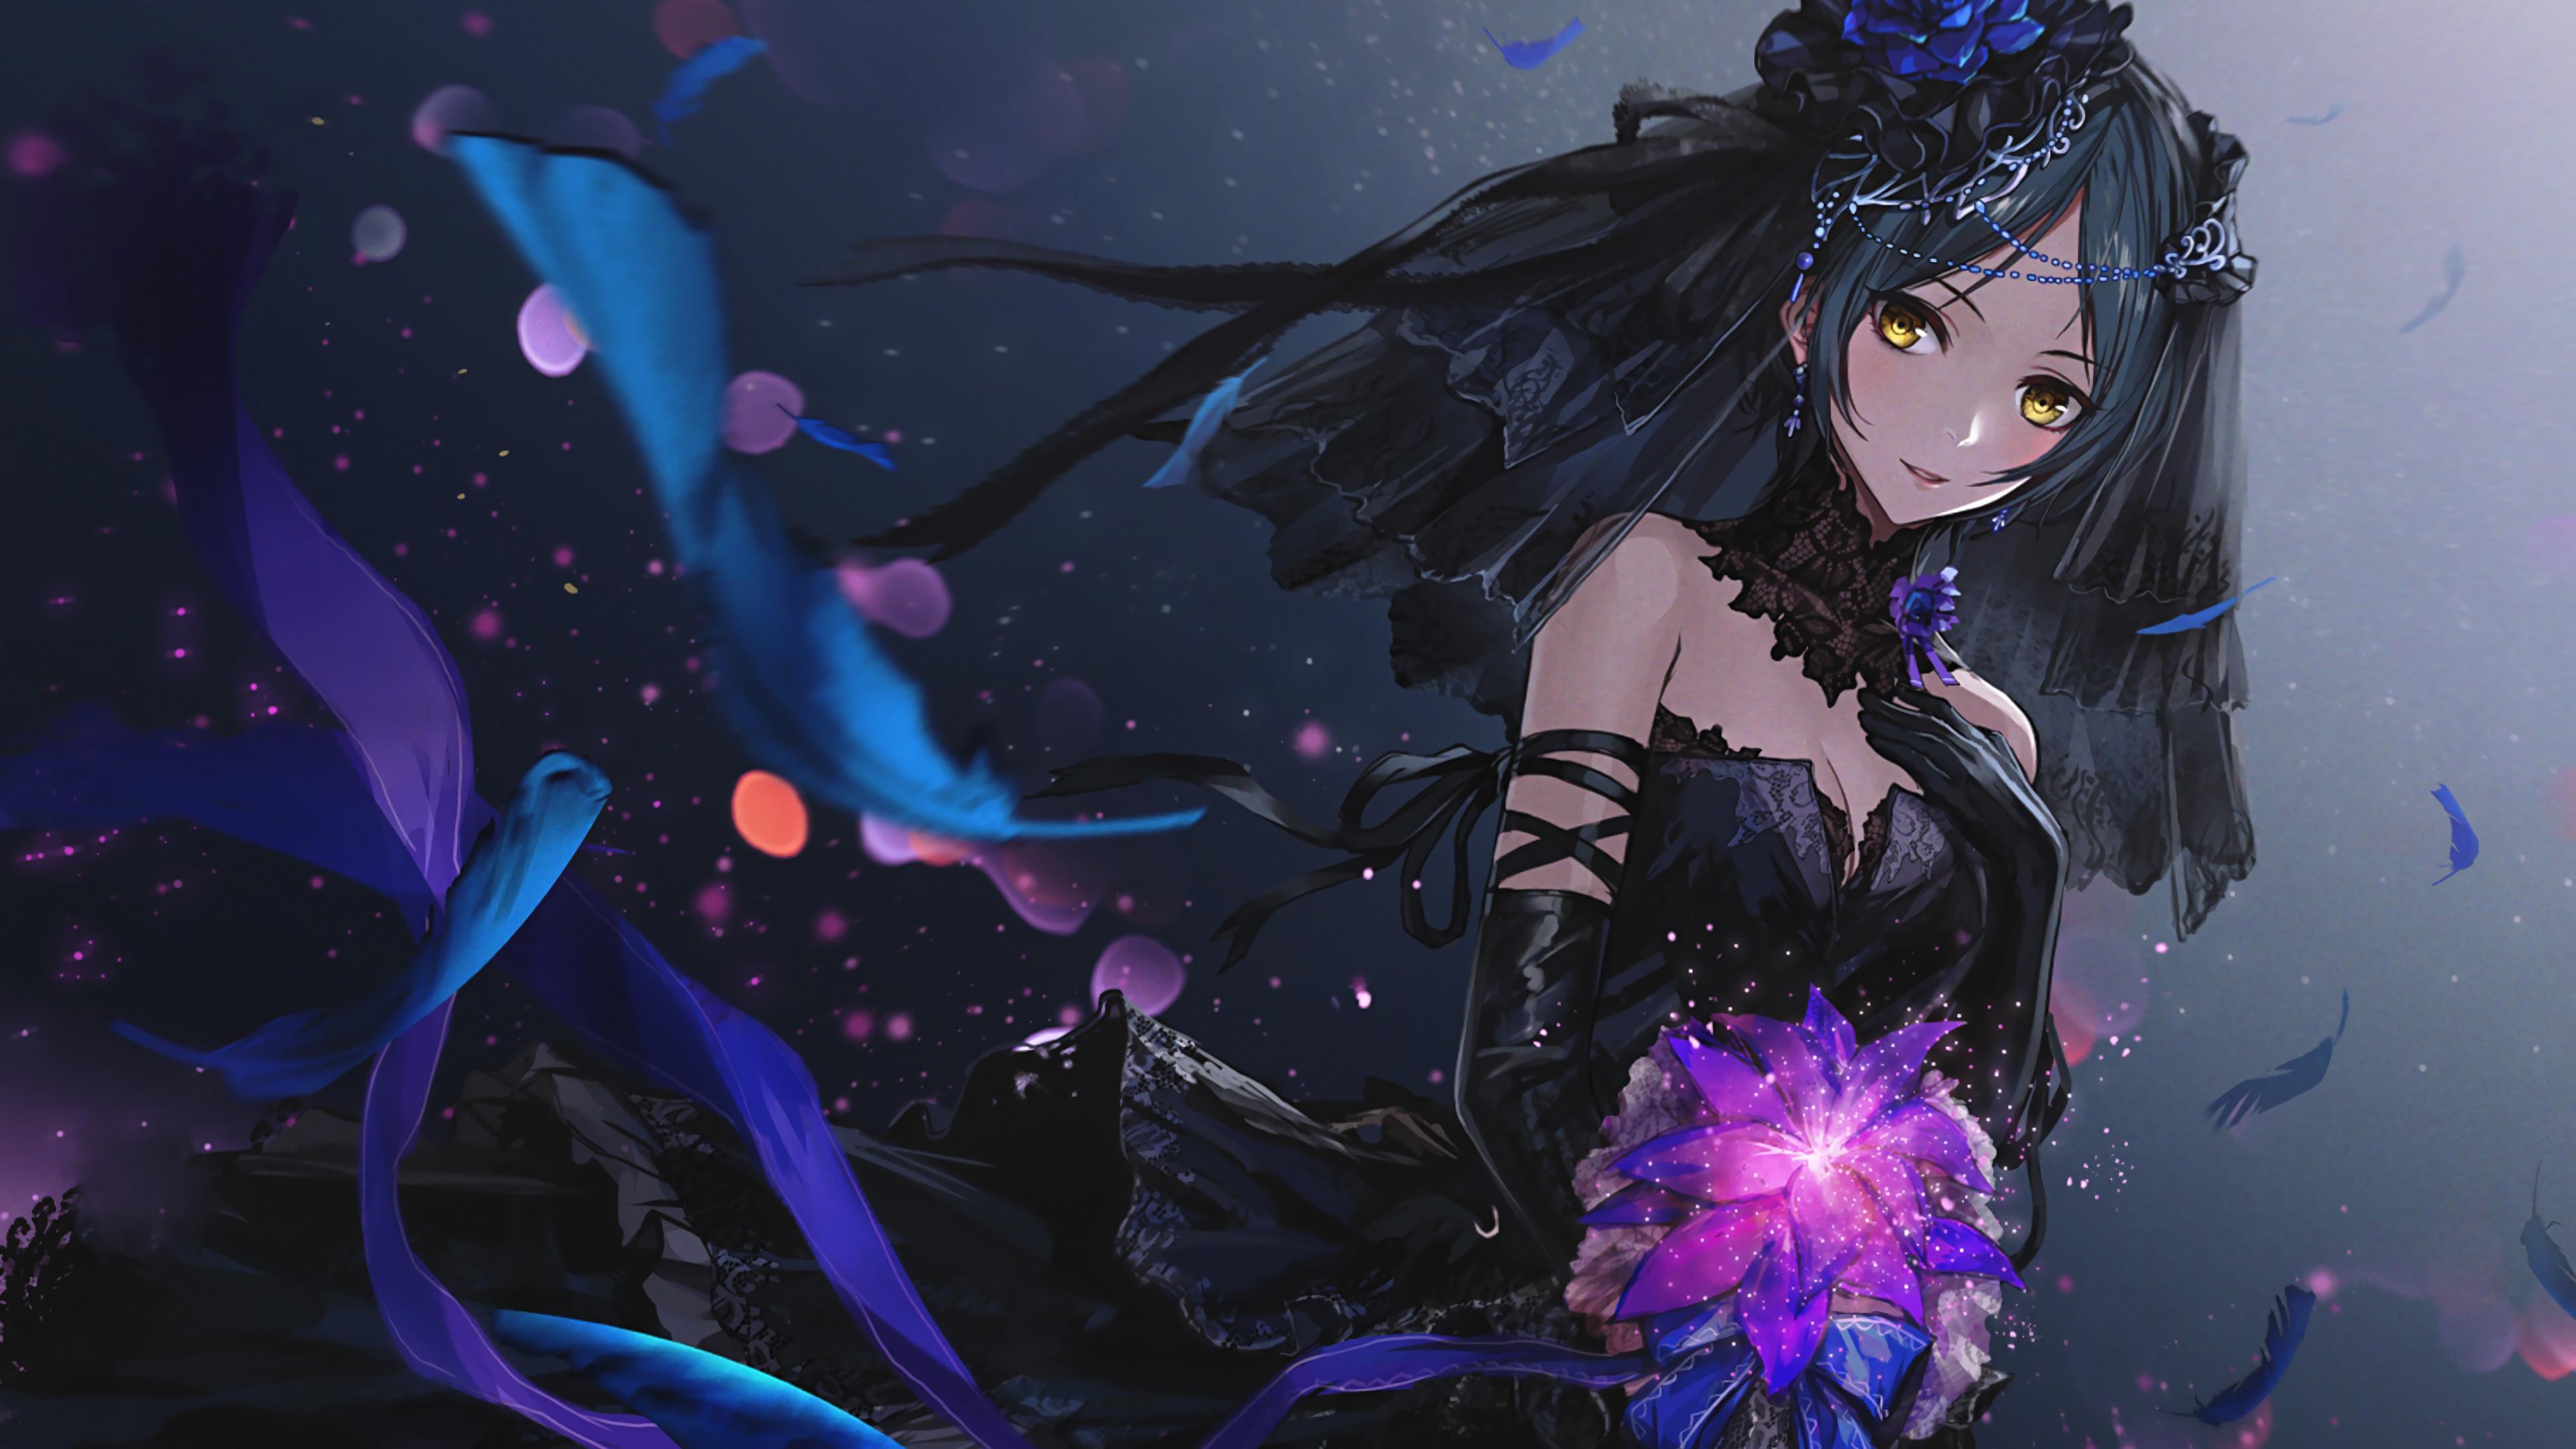 Anime girl with black dress Wallpapers 4k Ultra HD ID:3726